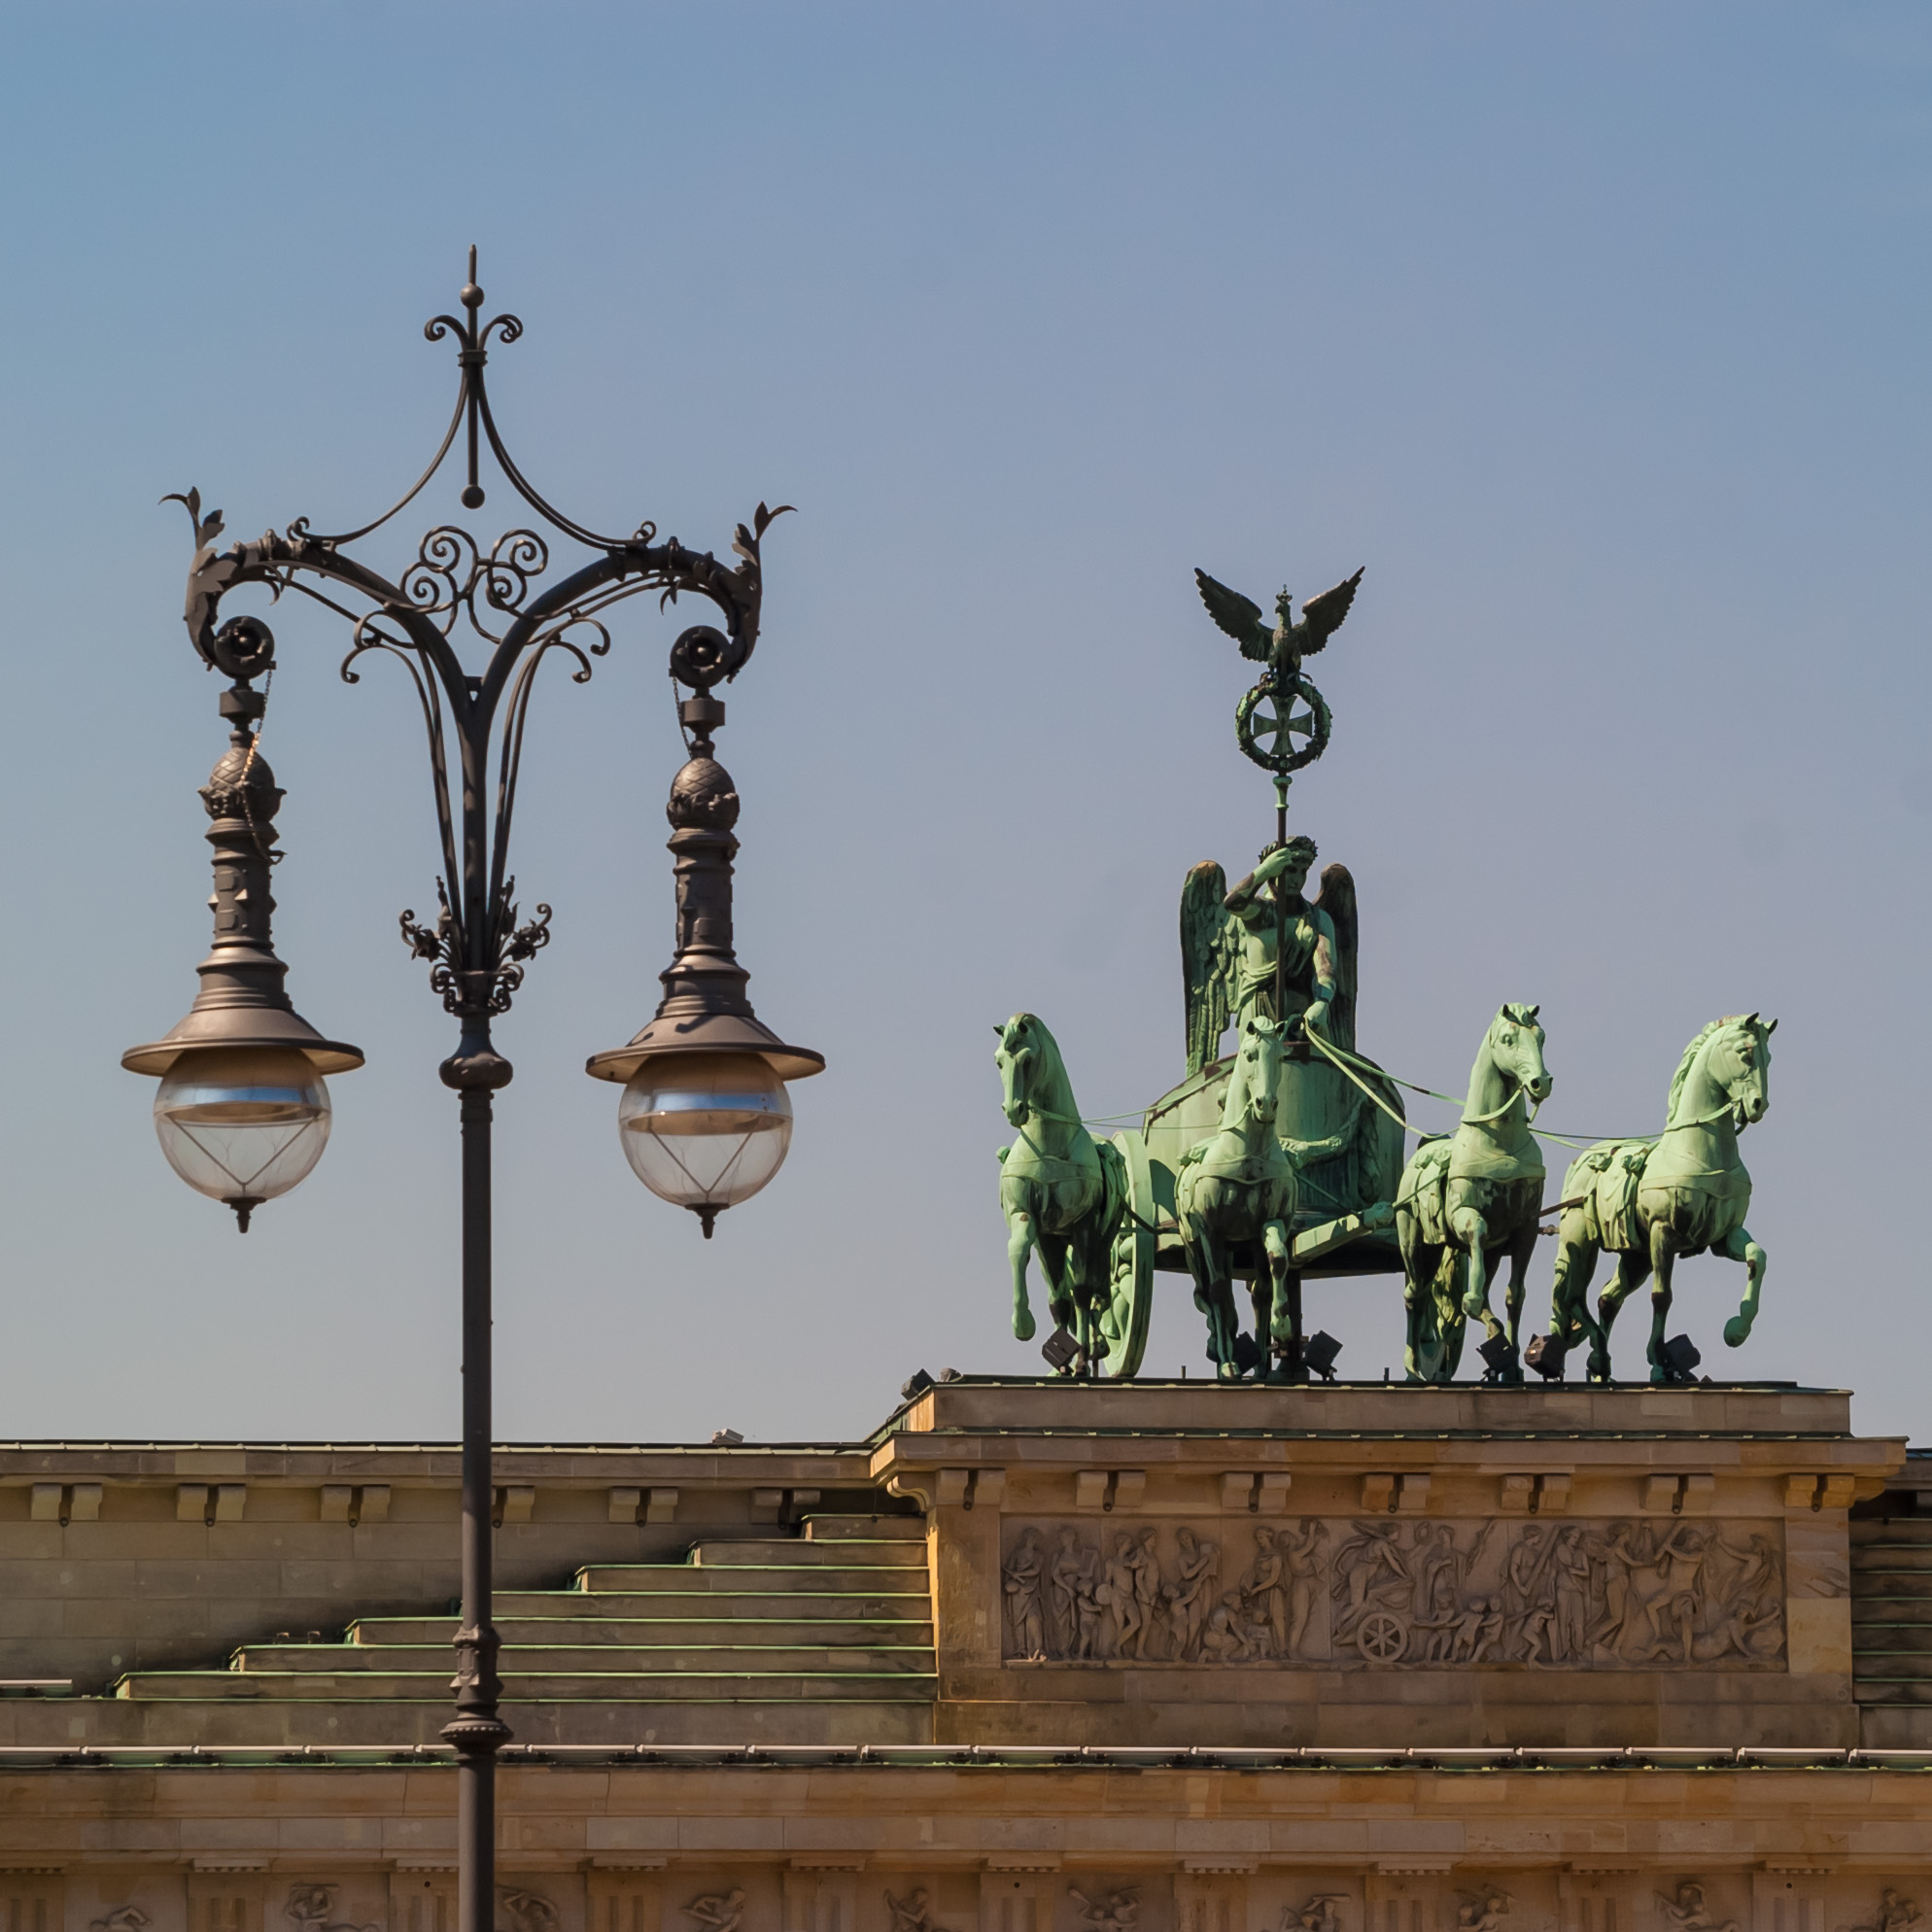 Berlin - Quadriga on the Brandenburg Gate